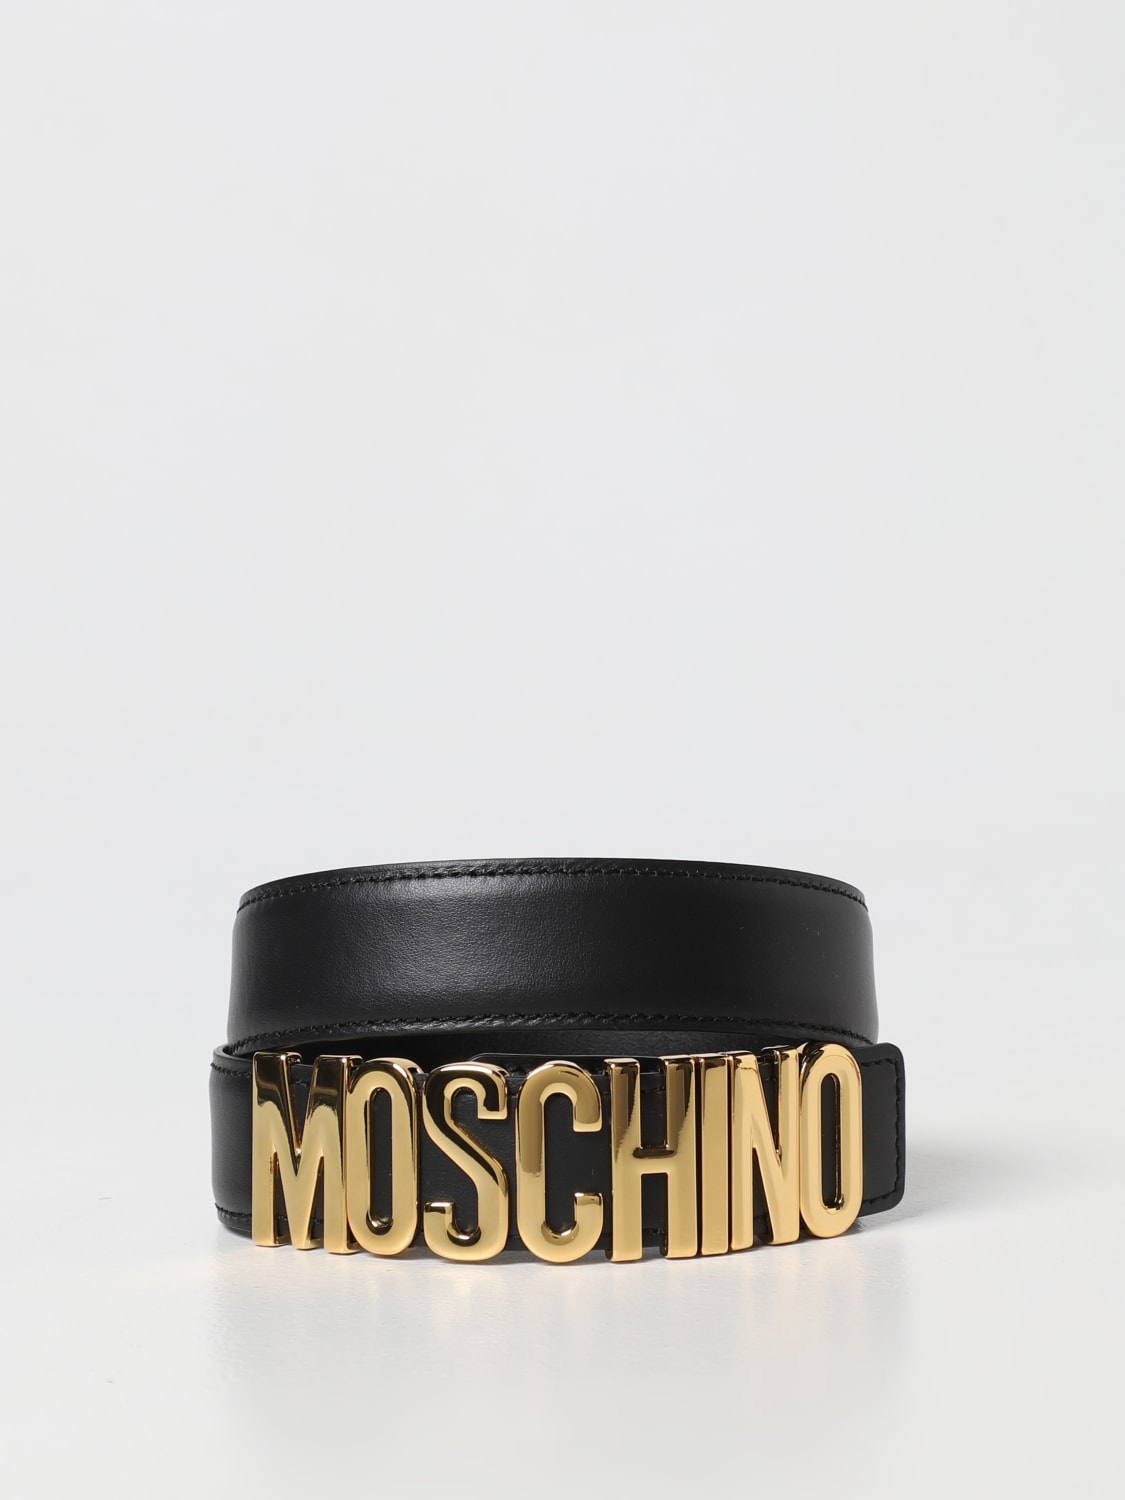 MOSCHINO COUTURE: Cinturón para mujer, Negro CinturÓN Moschino Couture 80078001 en línea en